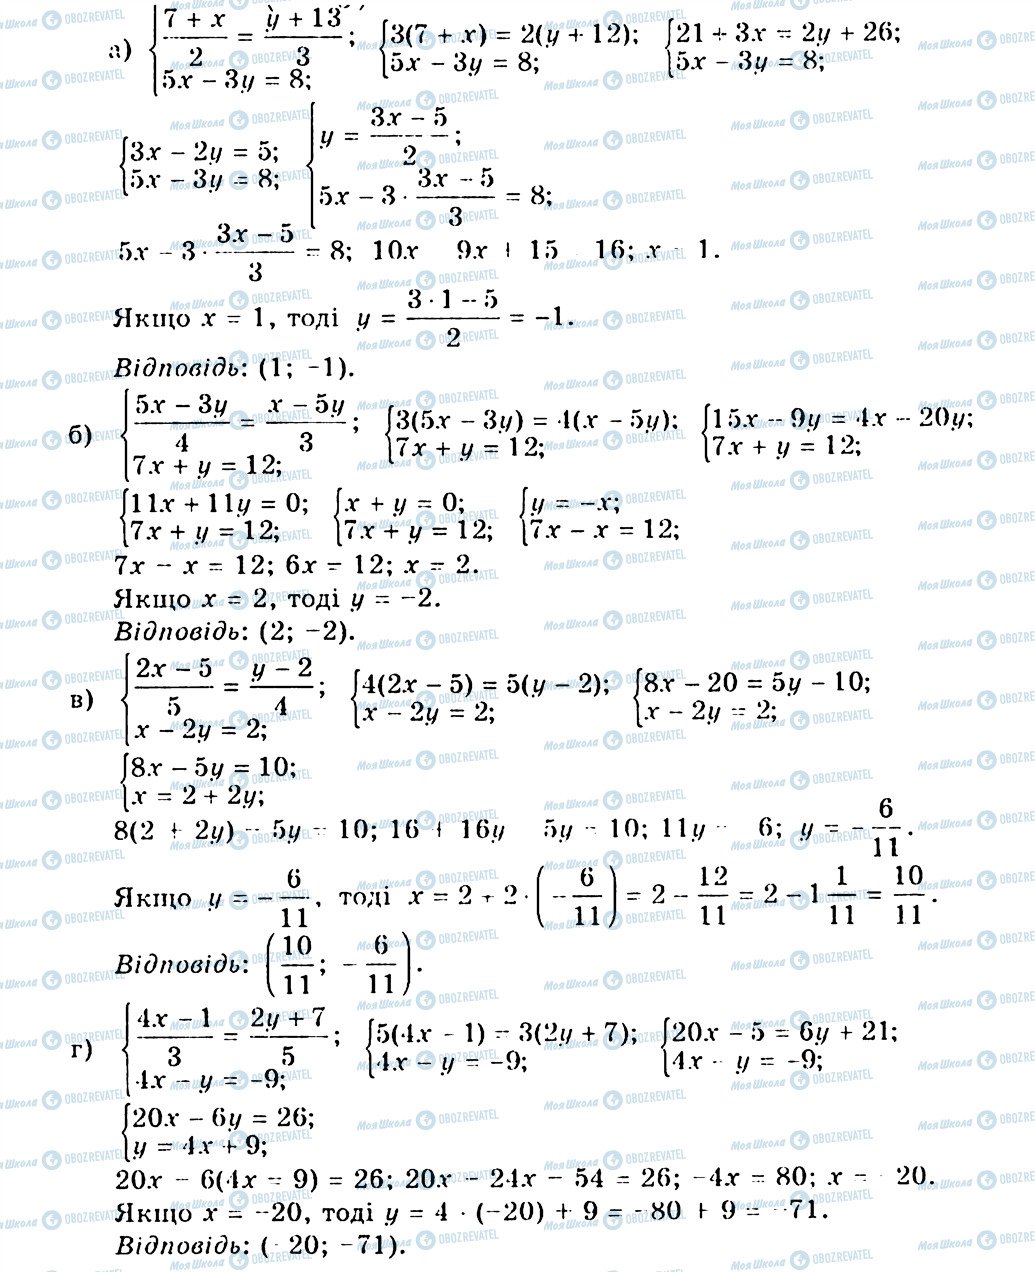 ГДЗ Алгебра 7 клас сторінка 1102